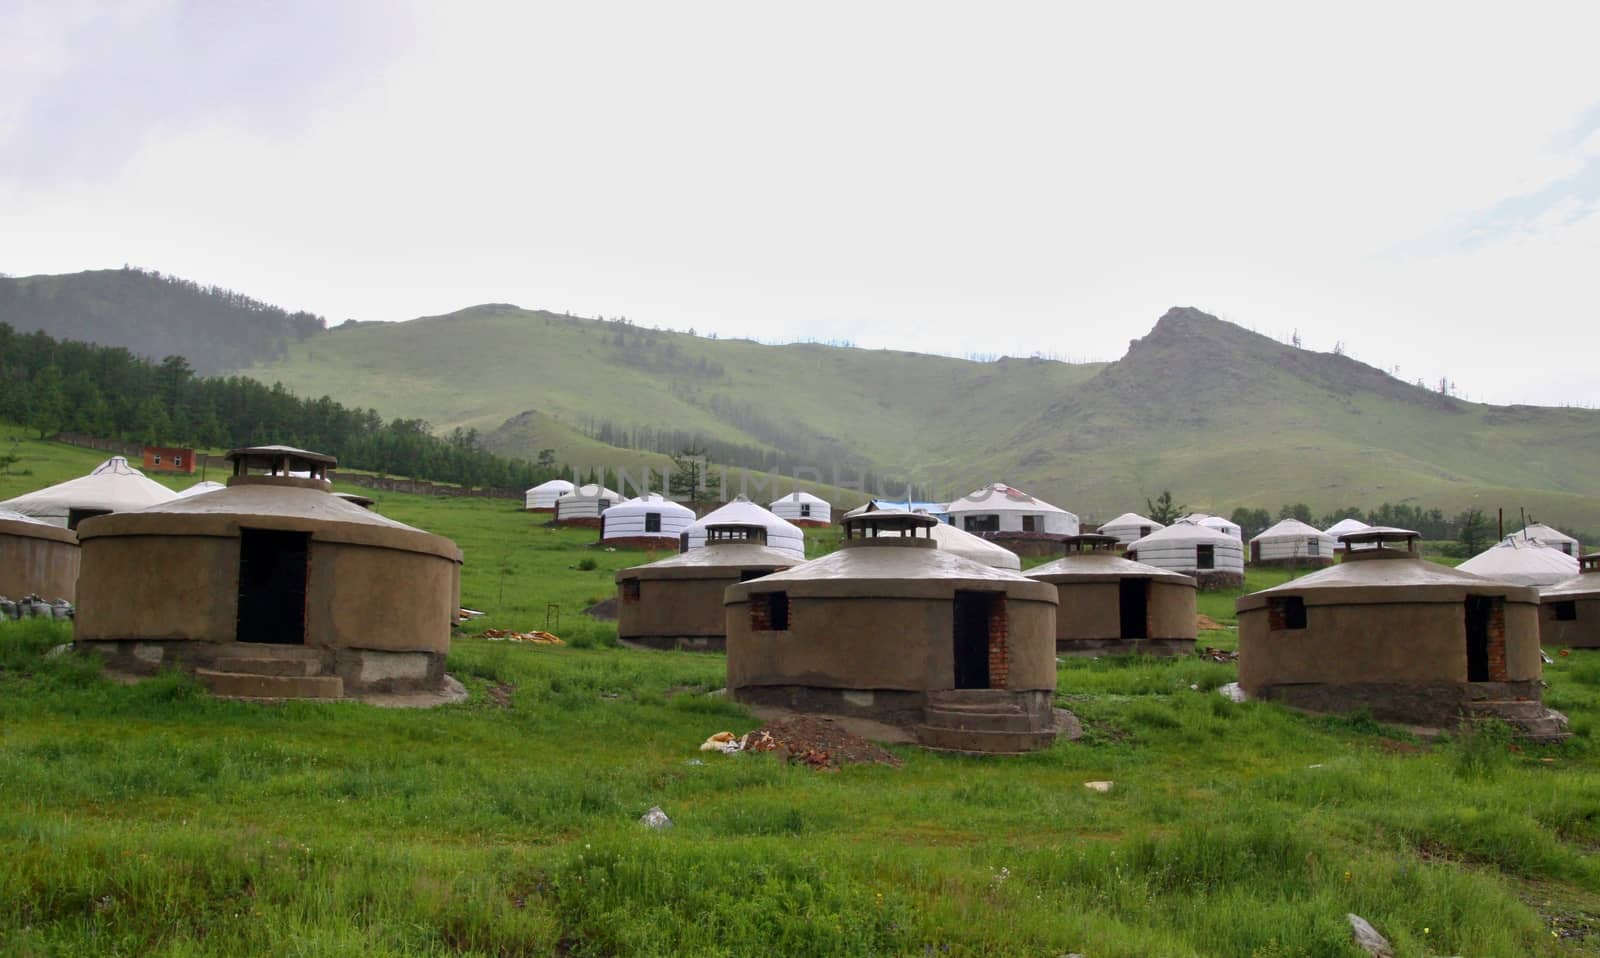  Mongolian Yurts camp near Ullanbaator in Mongolia by jnerad